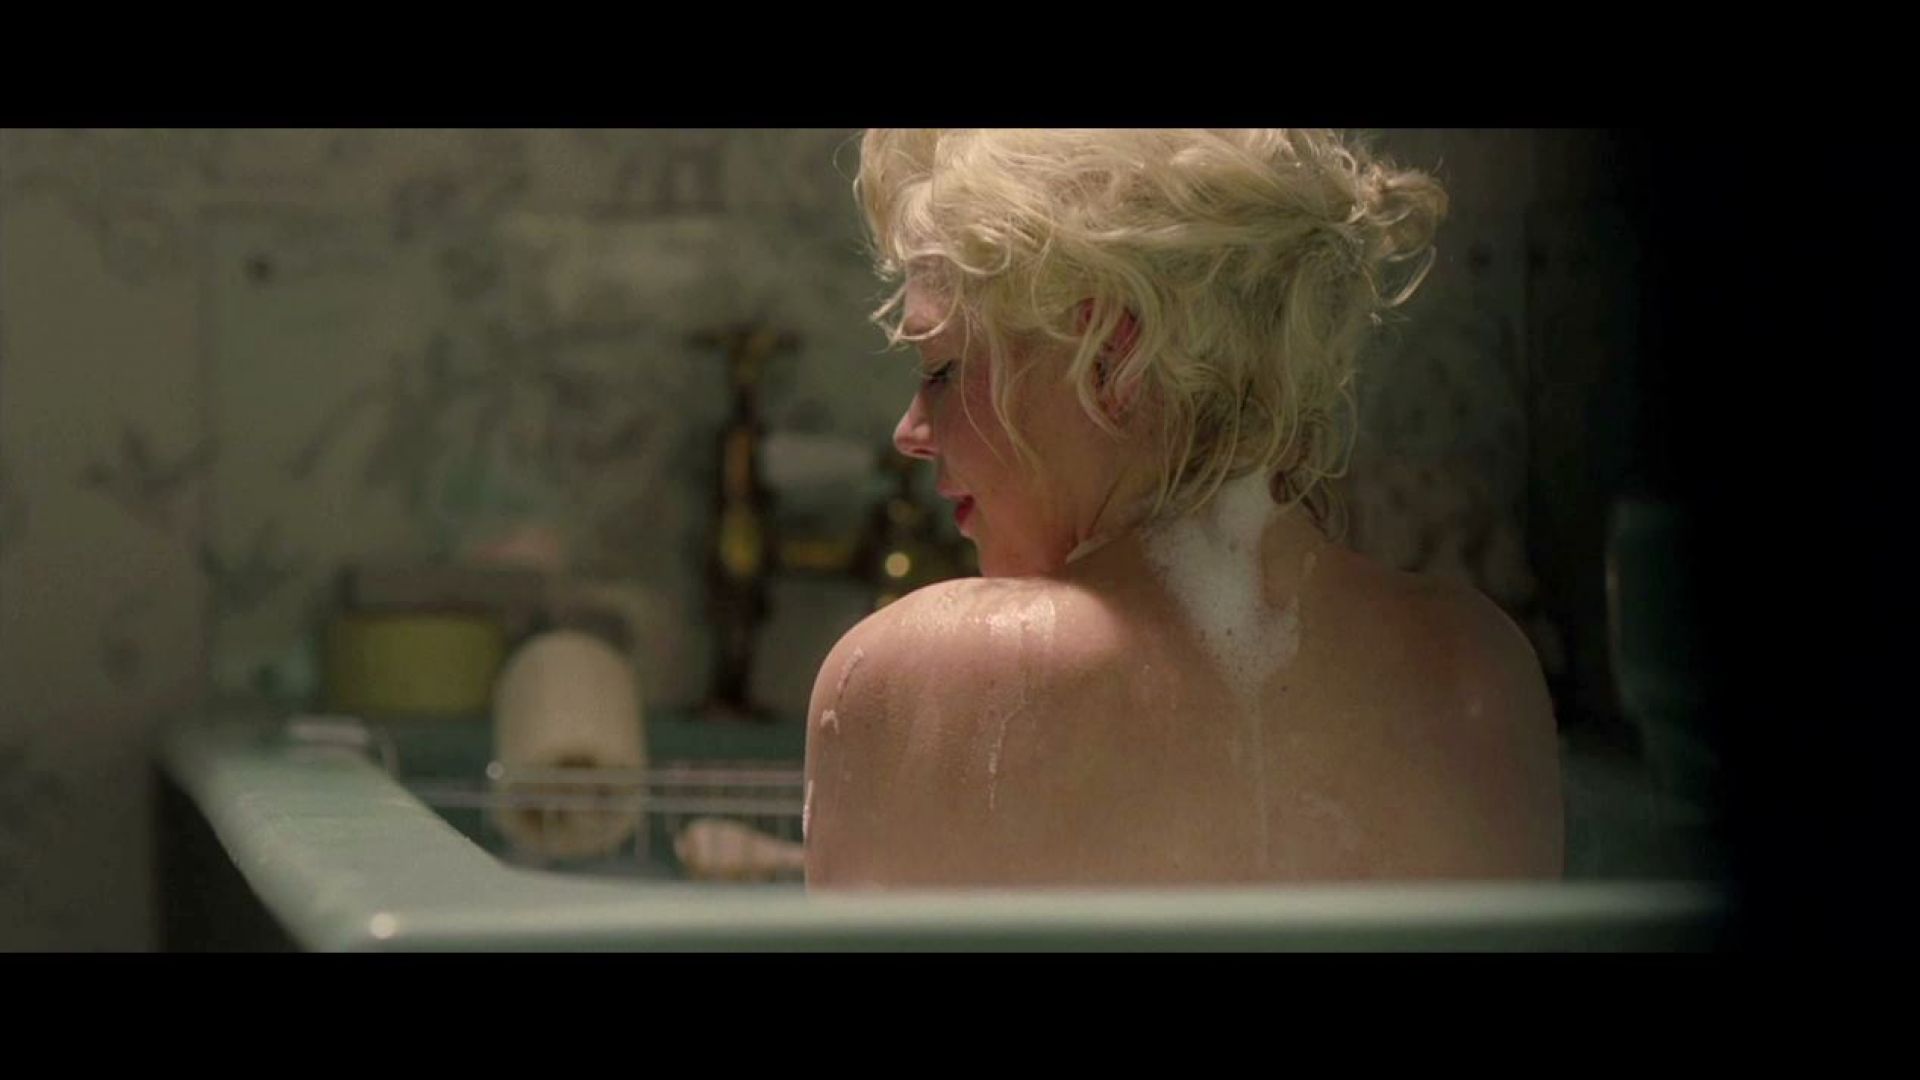 Colin Clark watches Marilyn Monroe in the bathtub in My Week With Marilyn